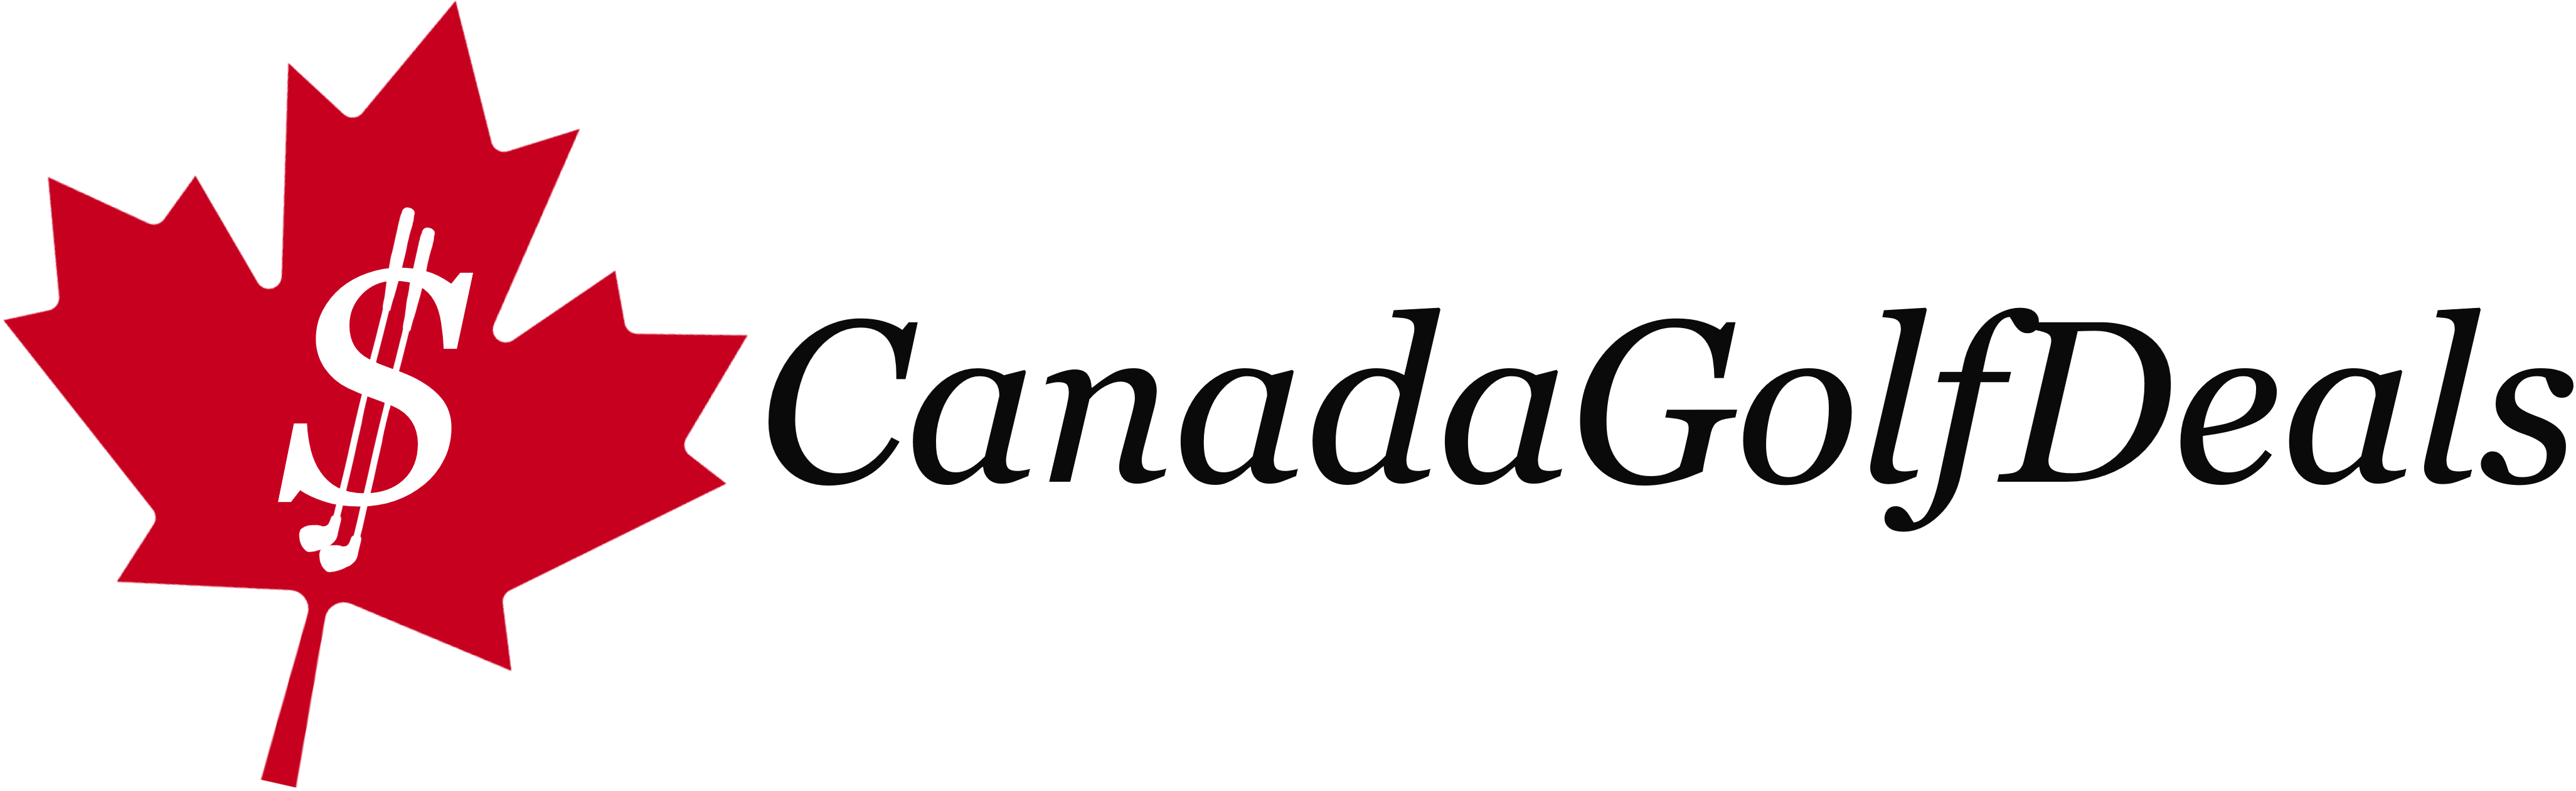 CanadaGolfDeals